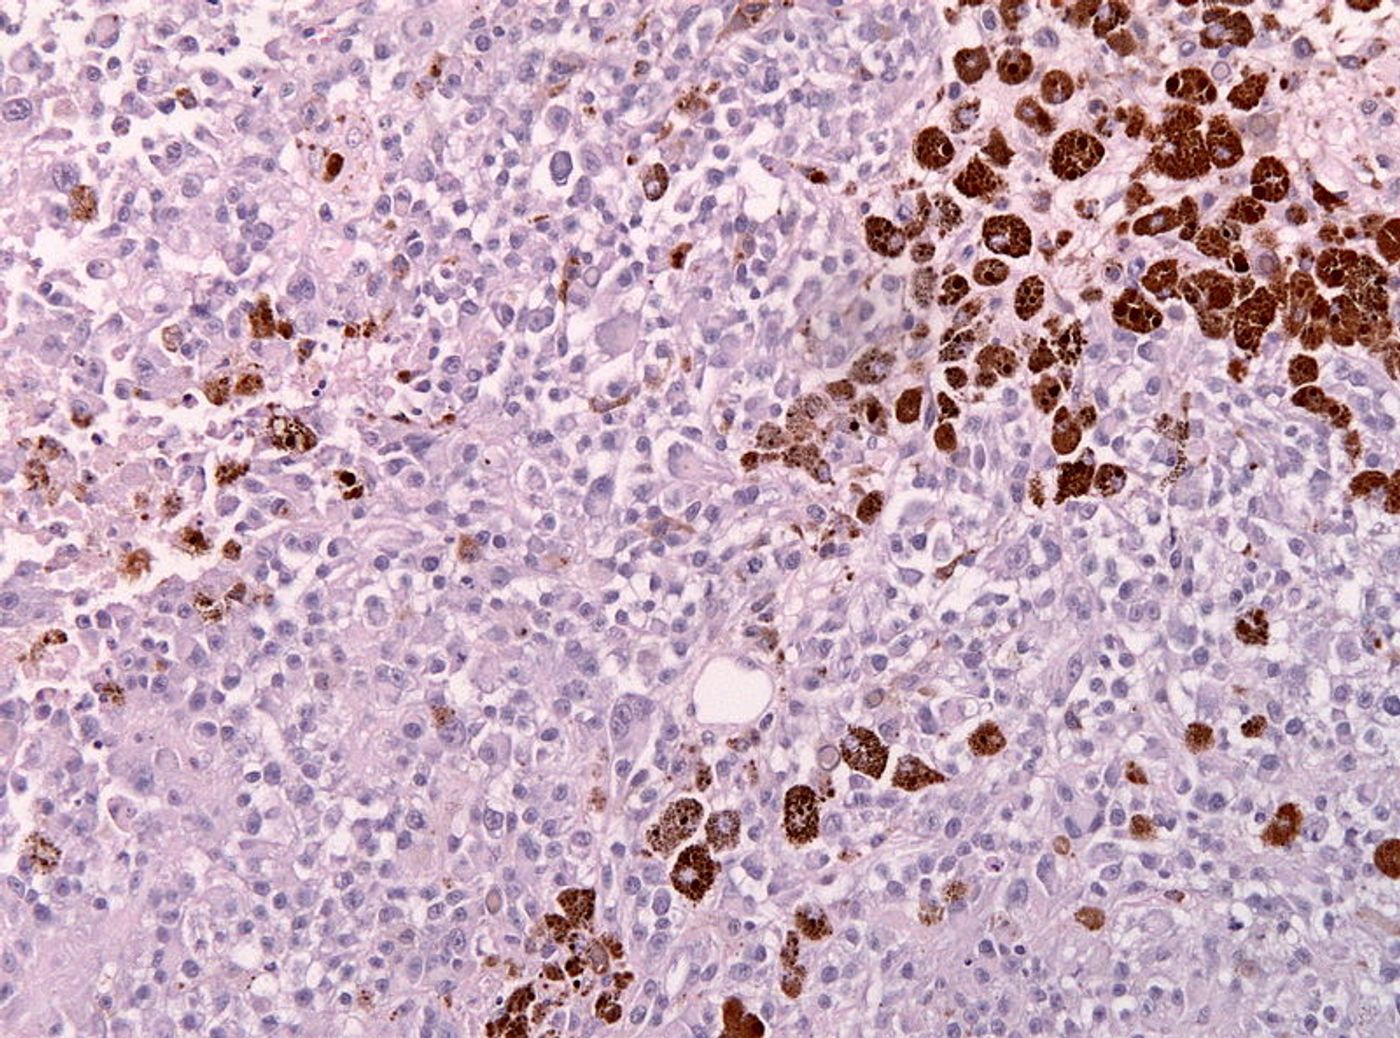 Pigmented cells of a malignant melanoma metastasis. Credit: Wikimedia user Jensflorian